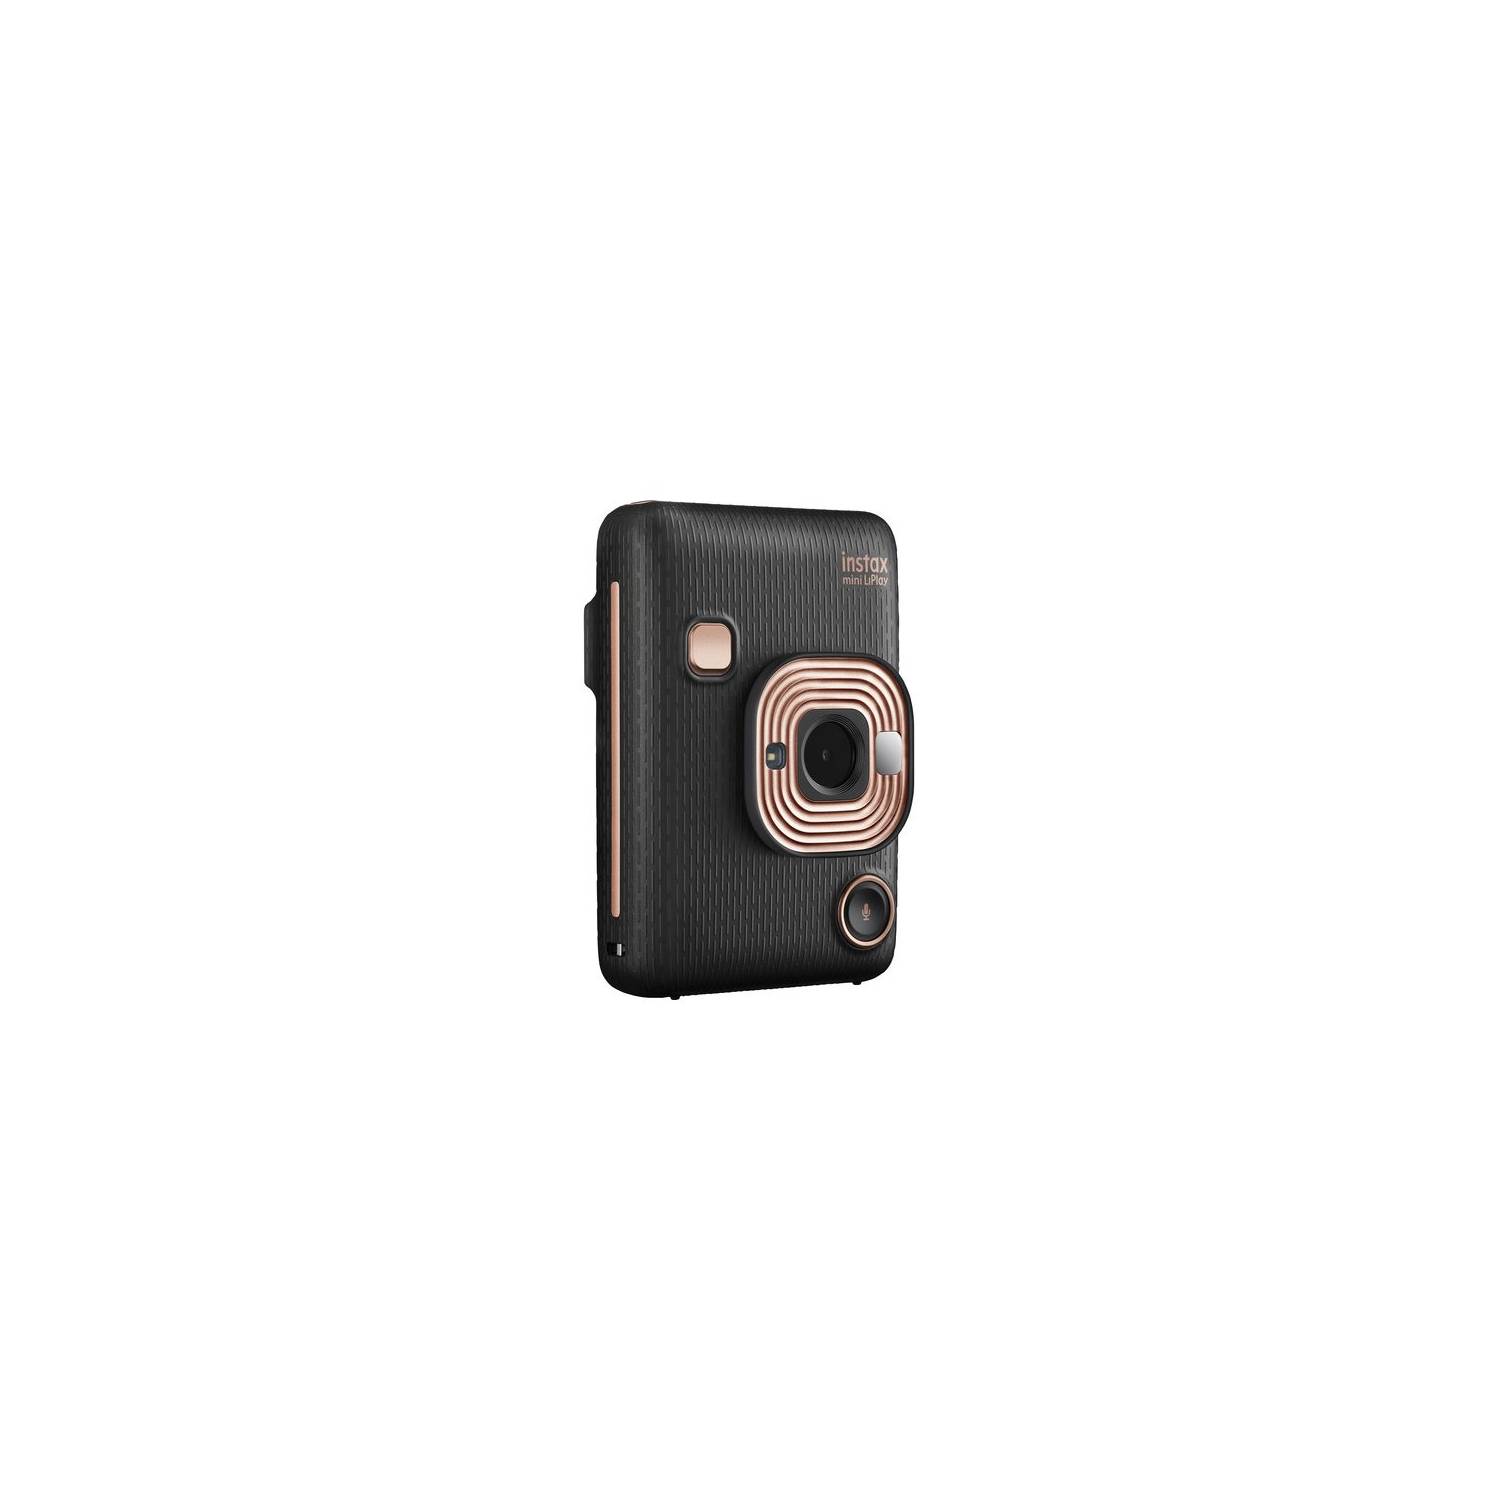 Cámara Instantánea Fujifilm Instax Mini LiPlay Negra